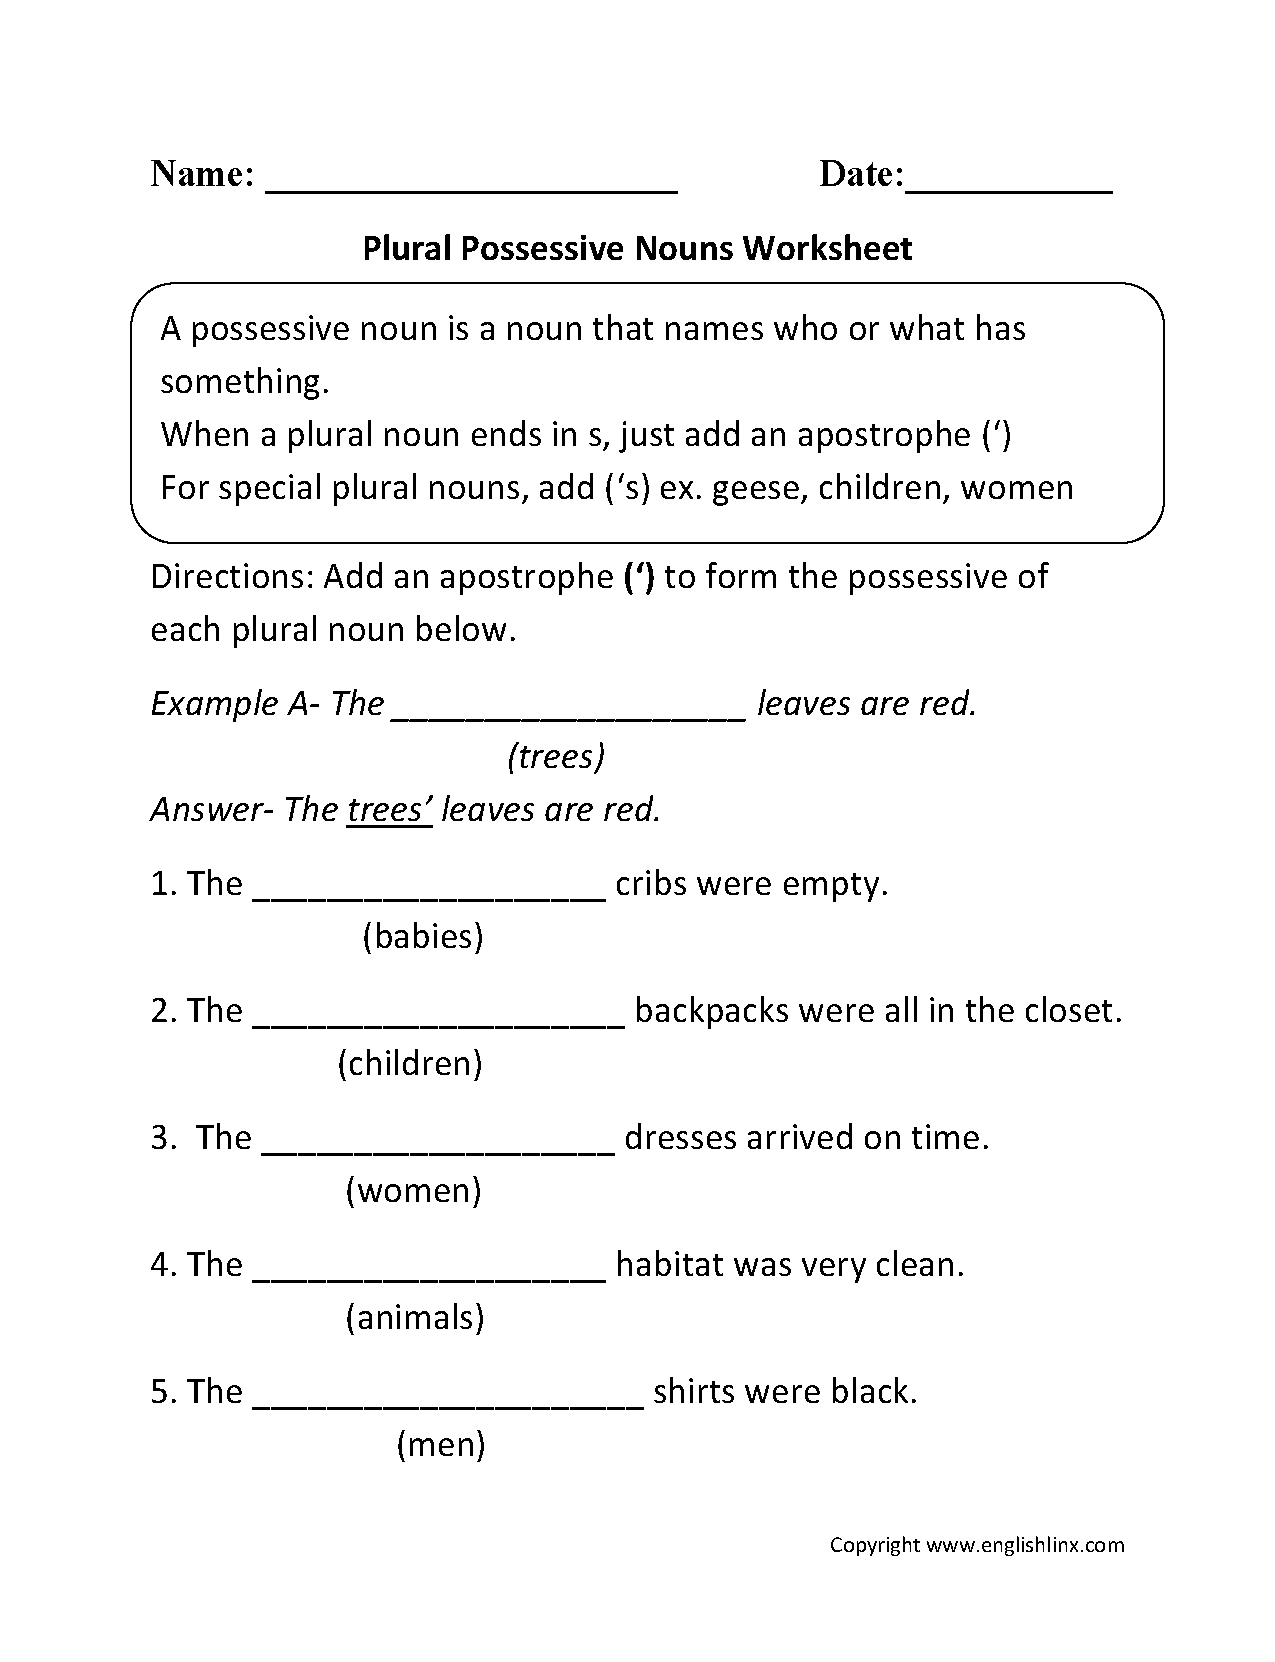 possessive-nouns-worksheets-plural-possessive-nouns-worksheets